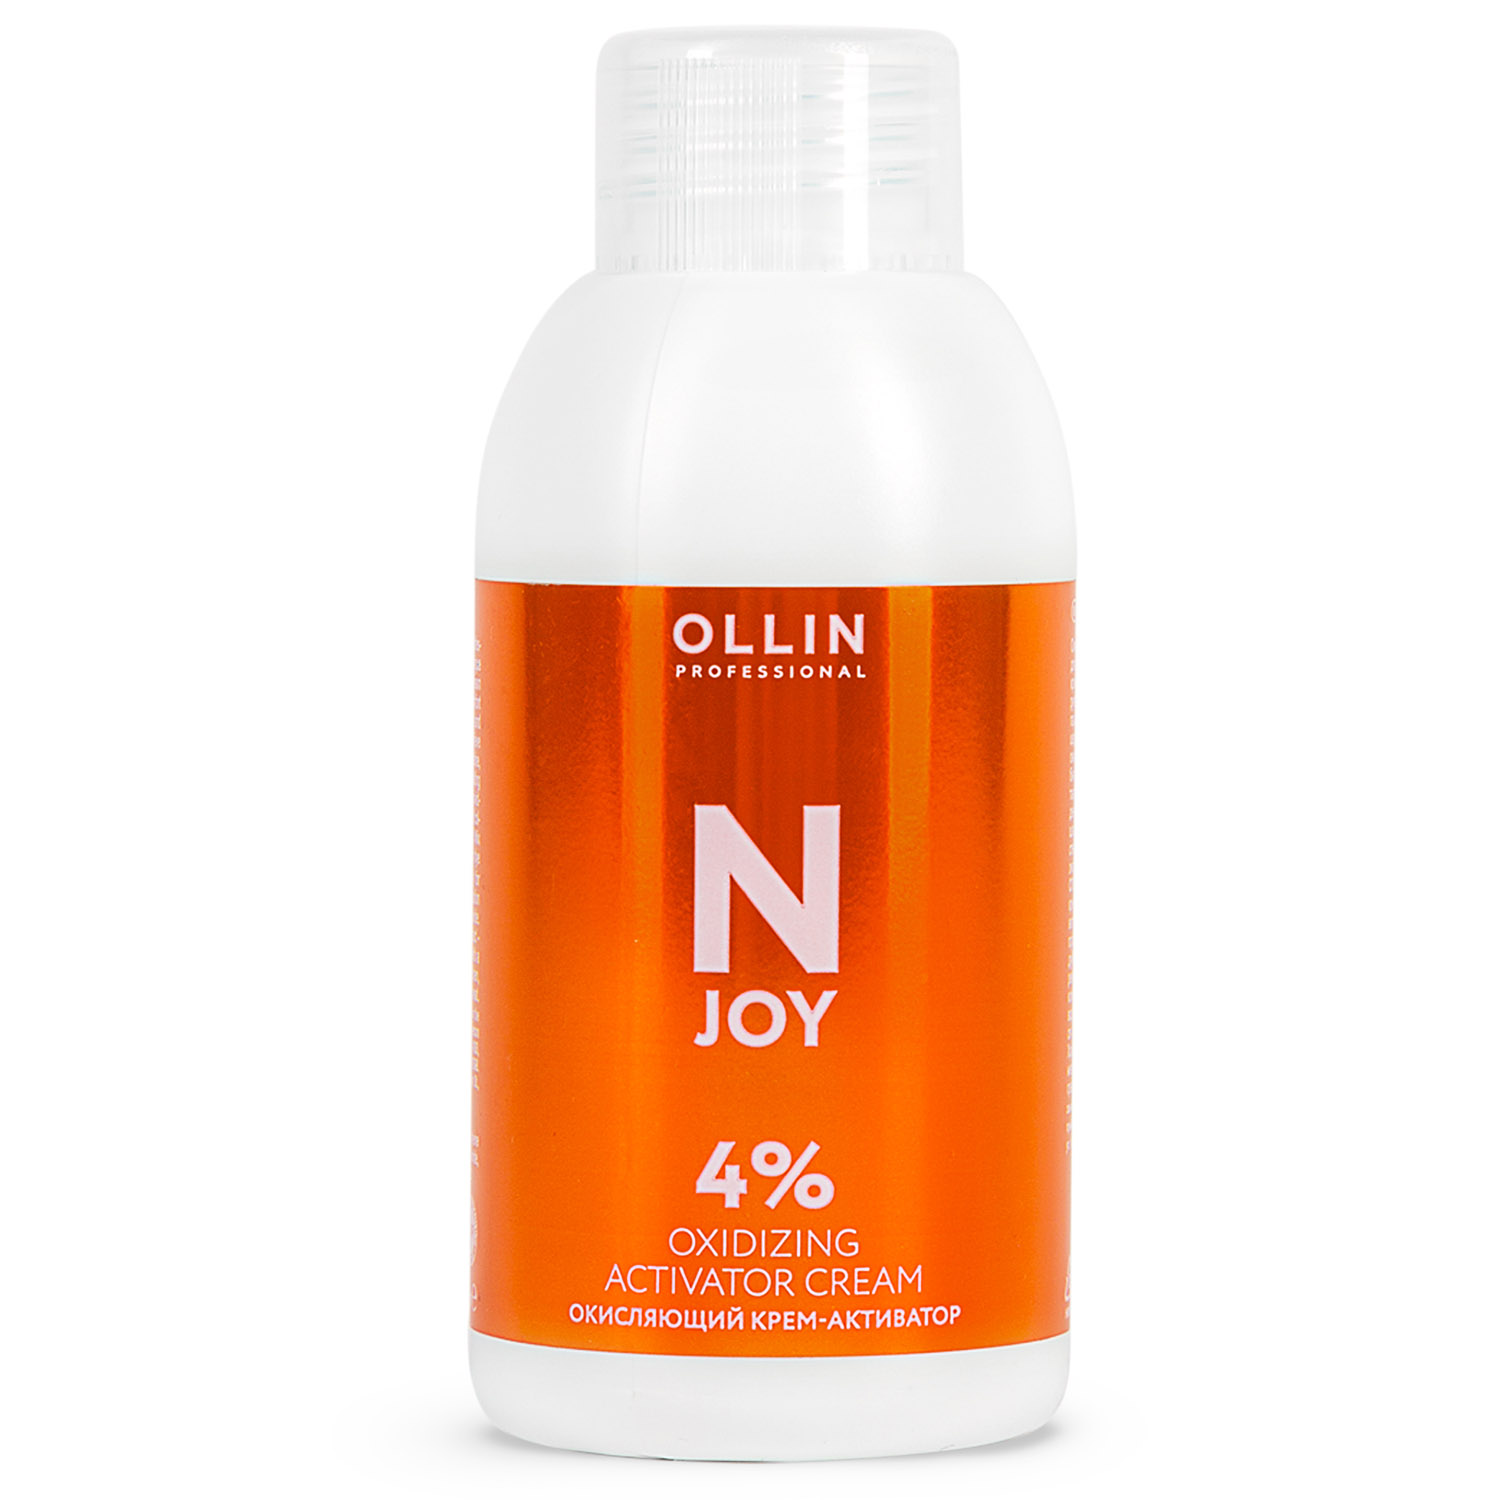 Ollin Professional Окисляющий крем-активатор 4%, 100 мл (Ollin Professional, N-Joy) окисляющий крем активатор 0 04 ollin n joy 100 мл